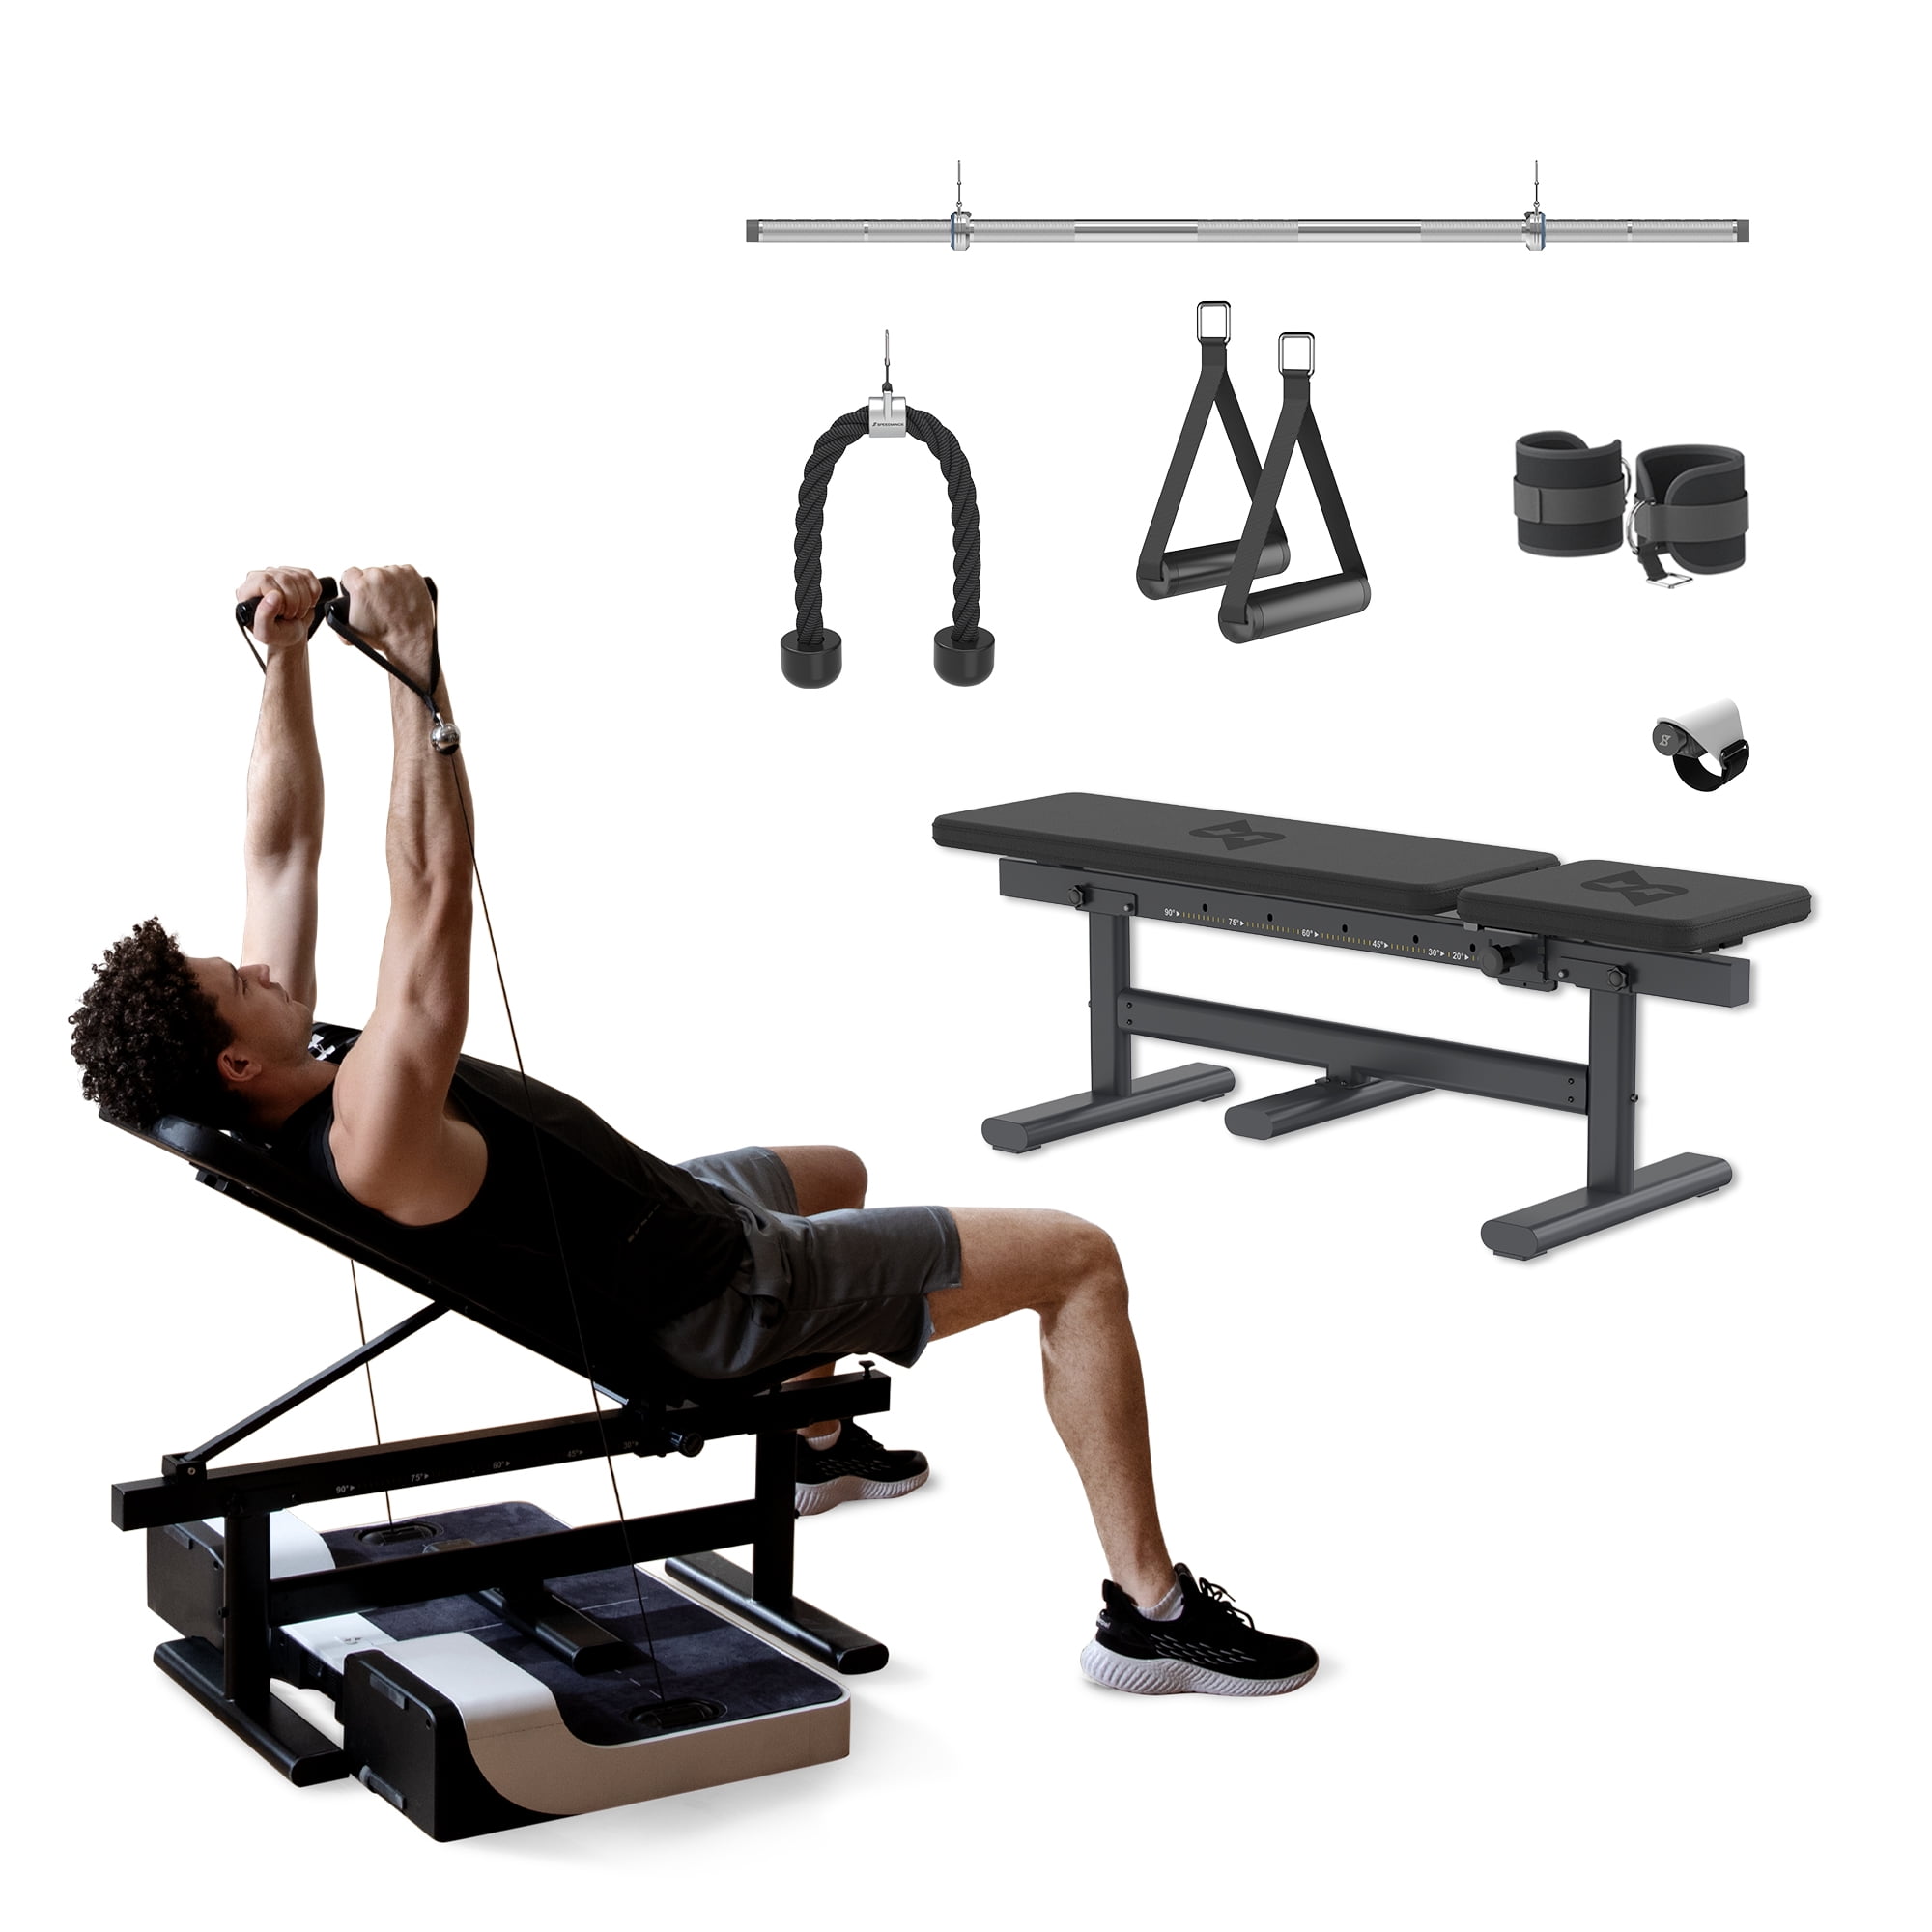 JX FITNESS 150LB Multifunctional Full Body Home Gym Equipment for